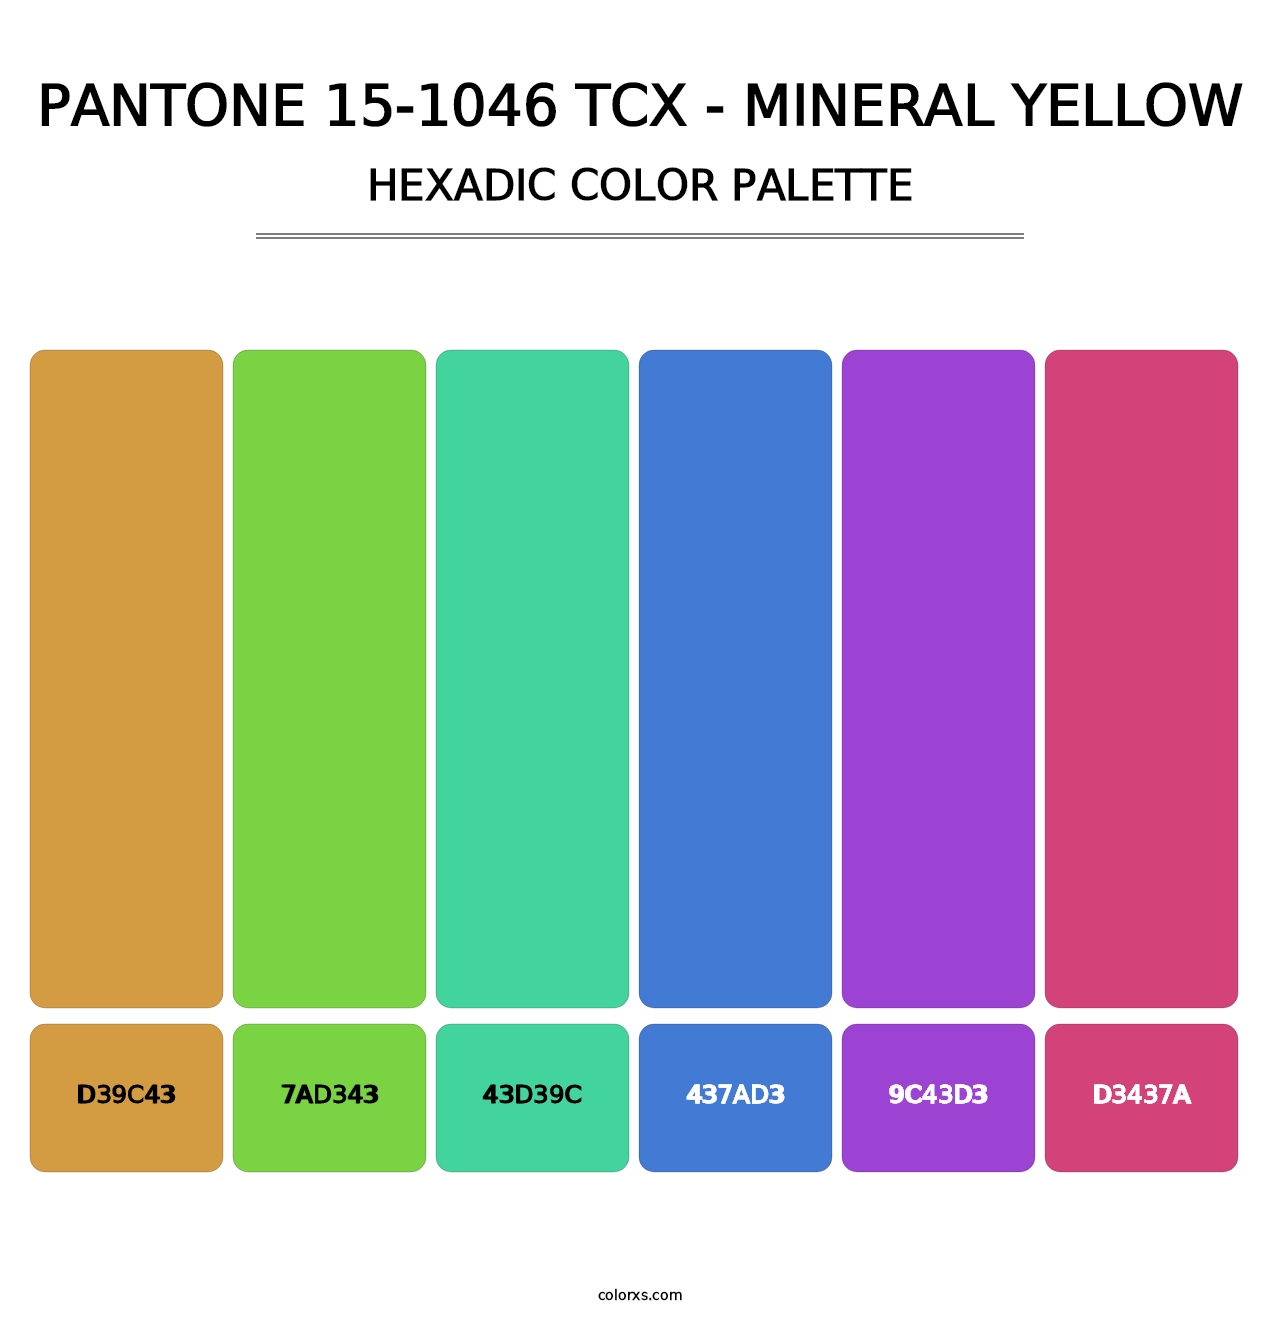 PANTONE 15-1046 TCX - Mineral Yellow - Hexadic Color Palette